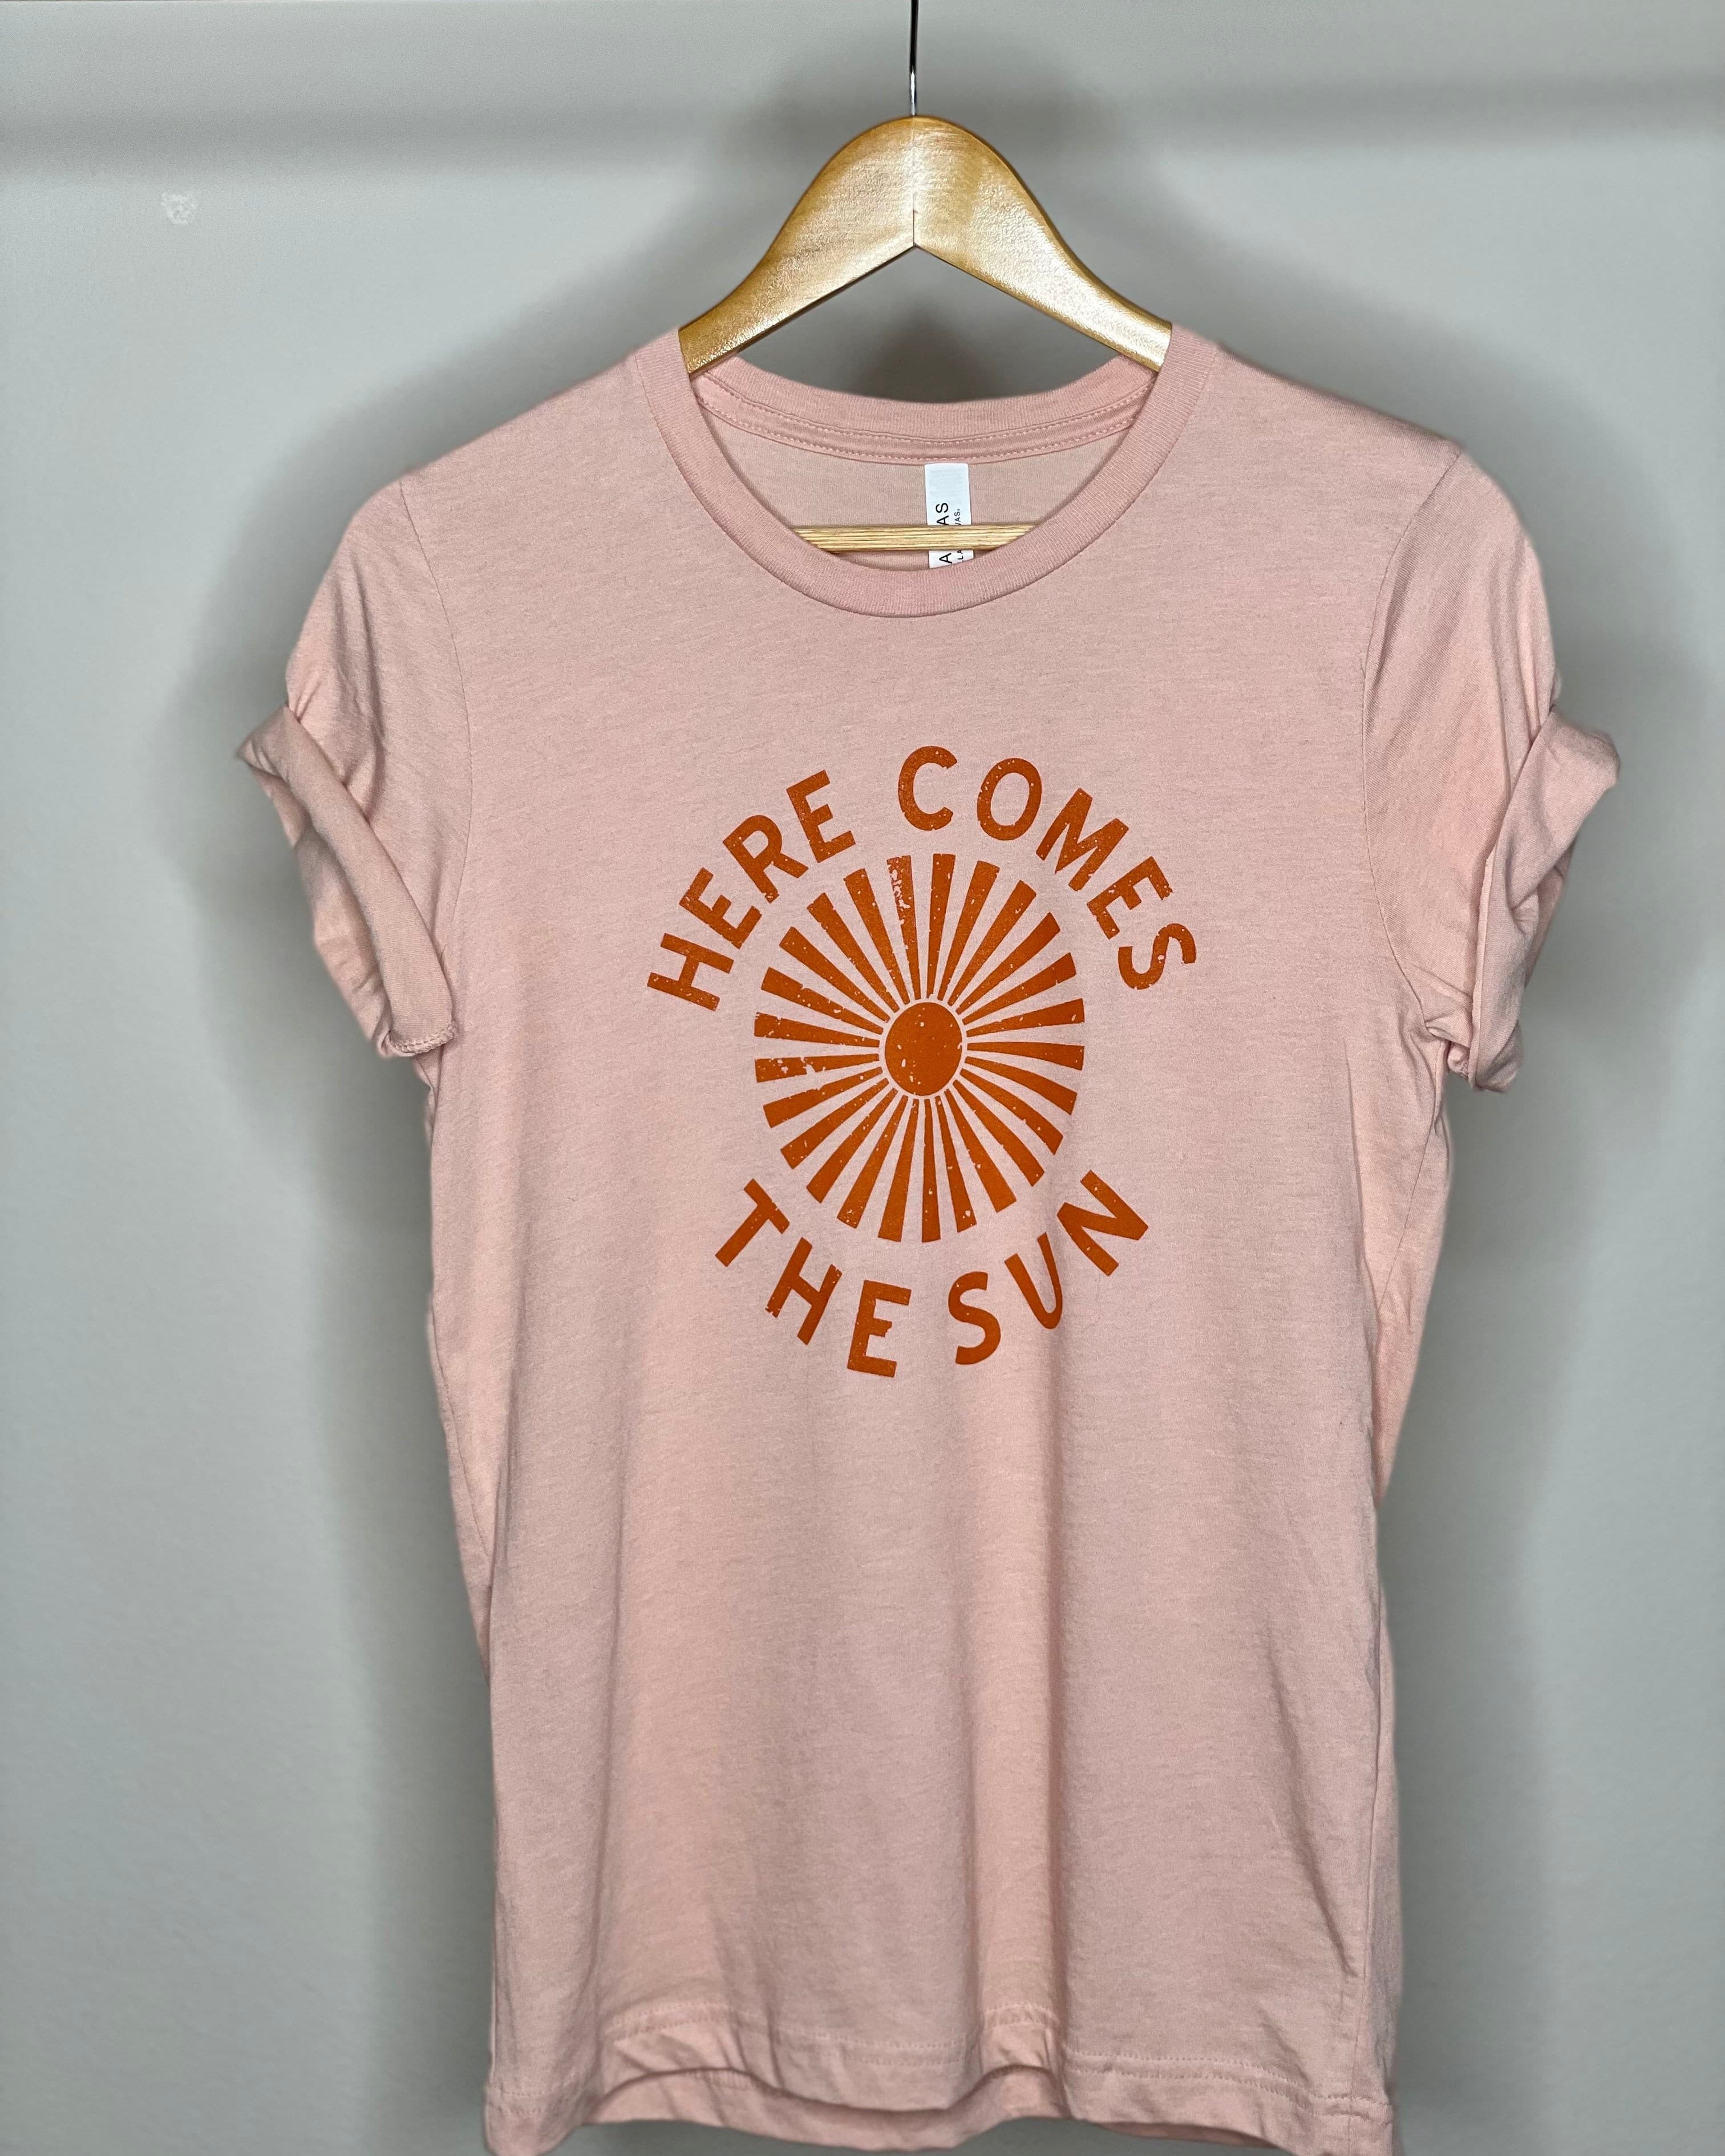 Here Comes The Sun Tee Shirt.